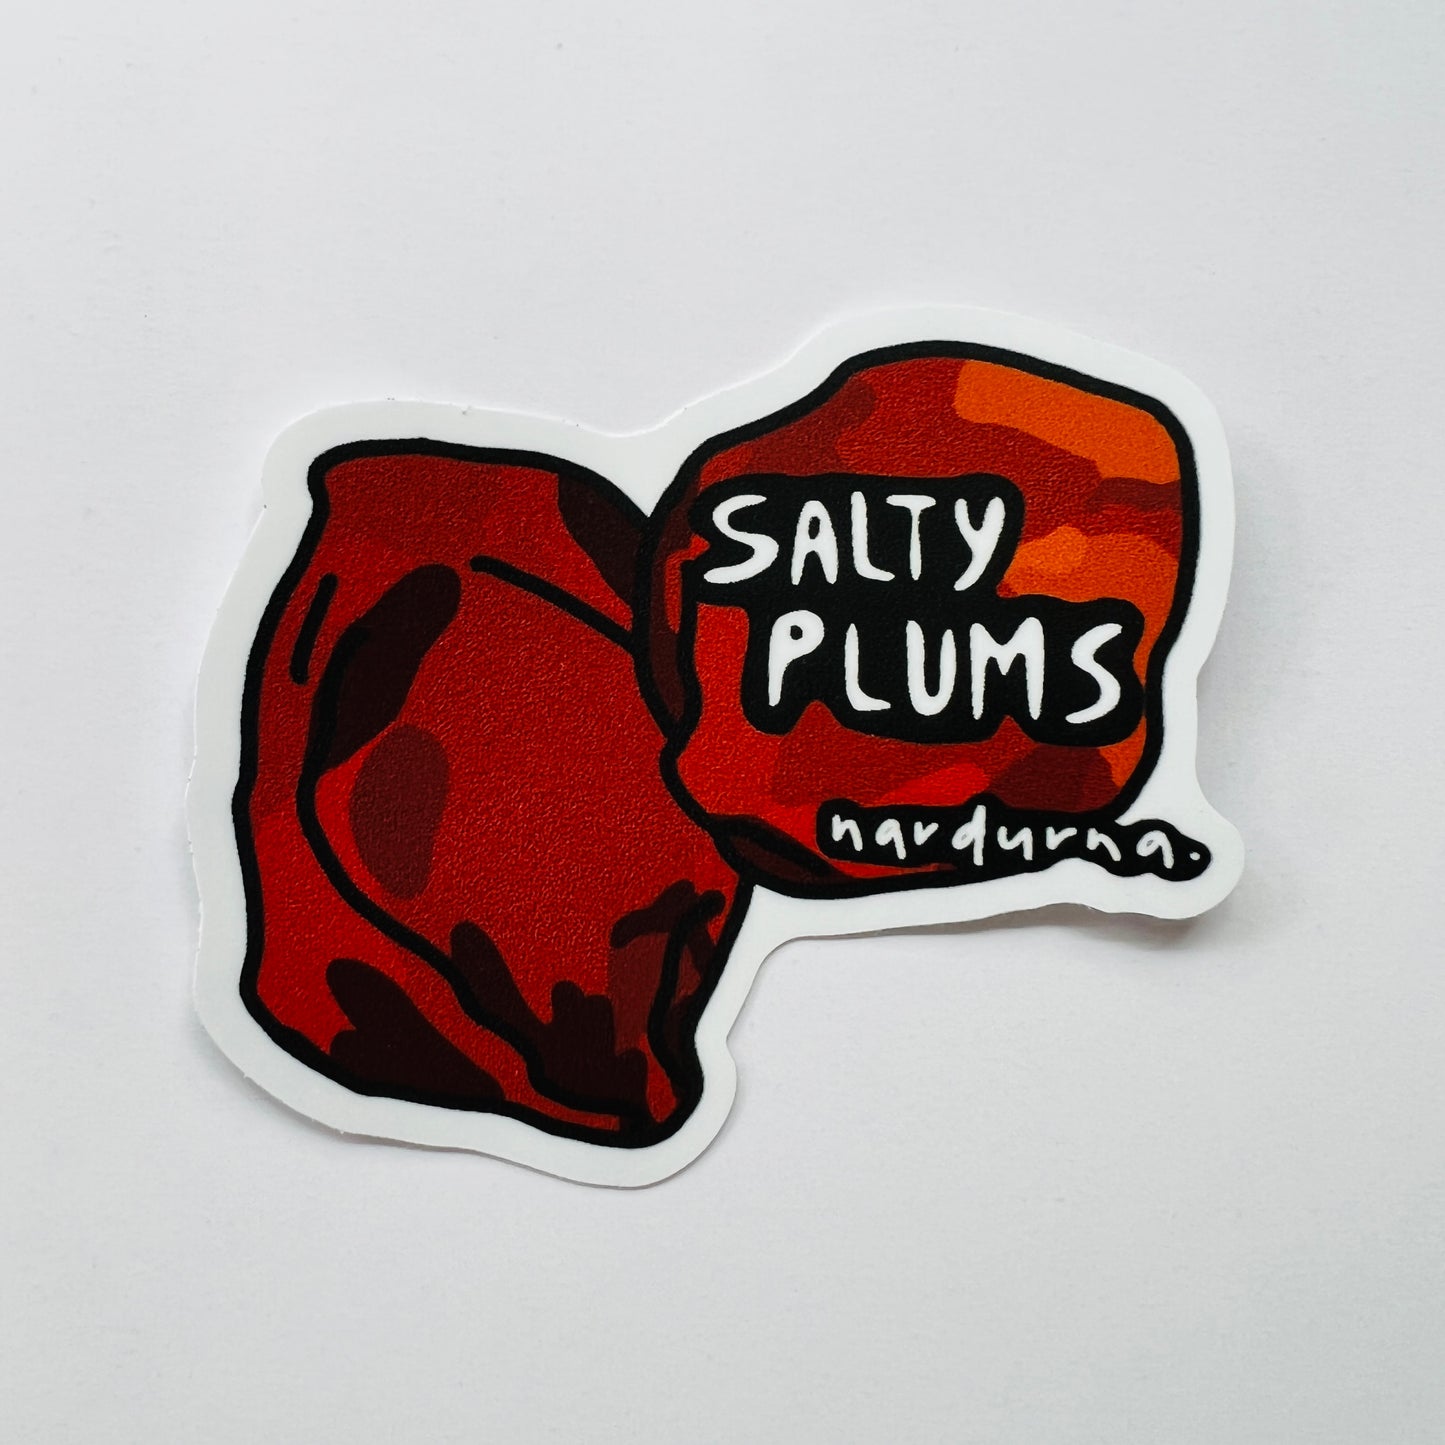 Salty Plums